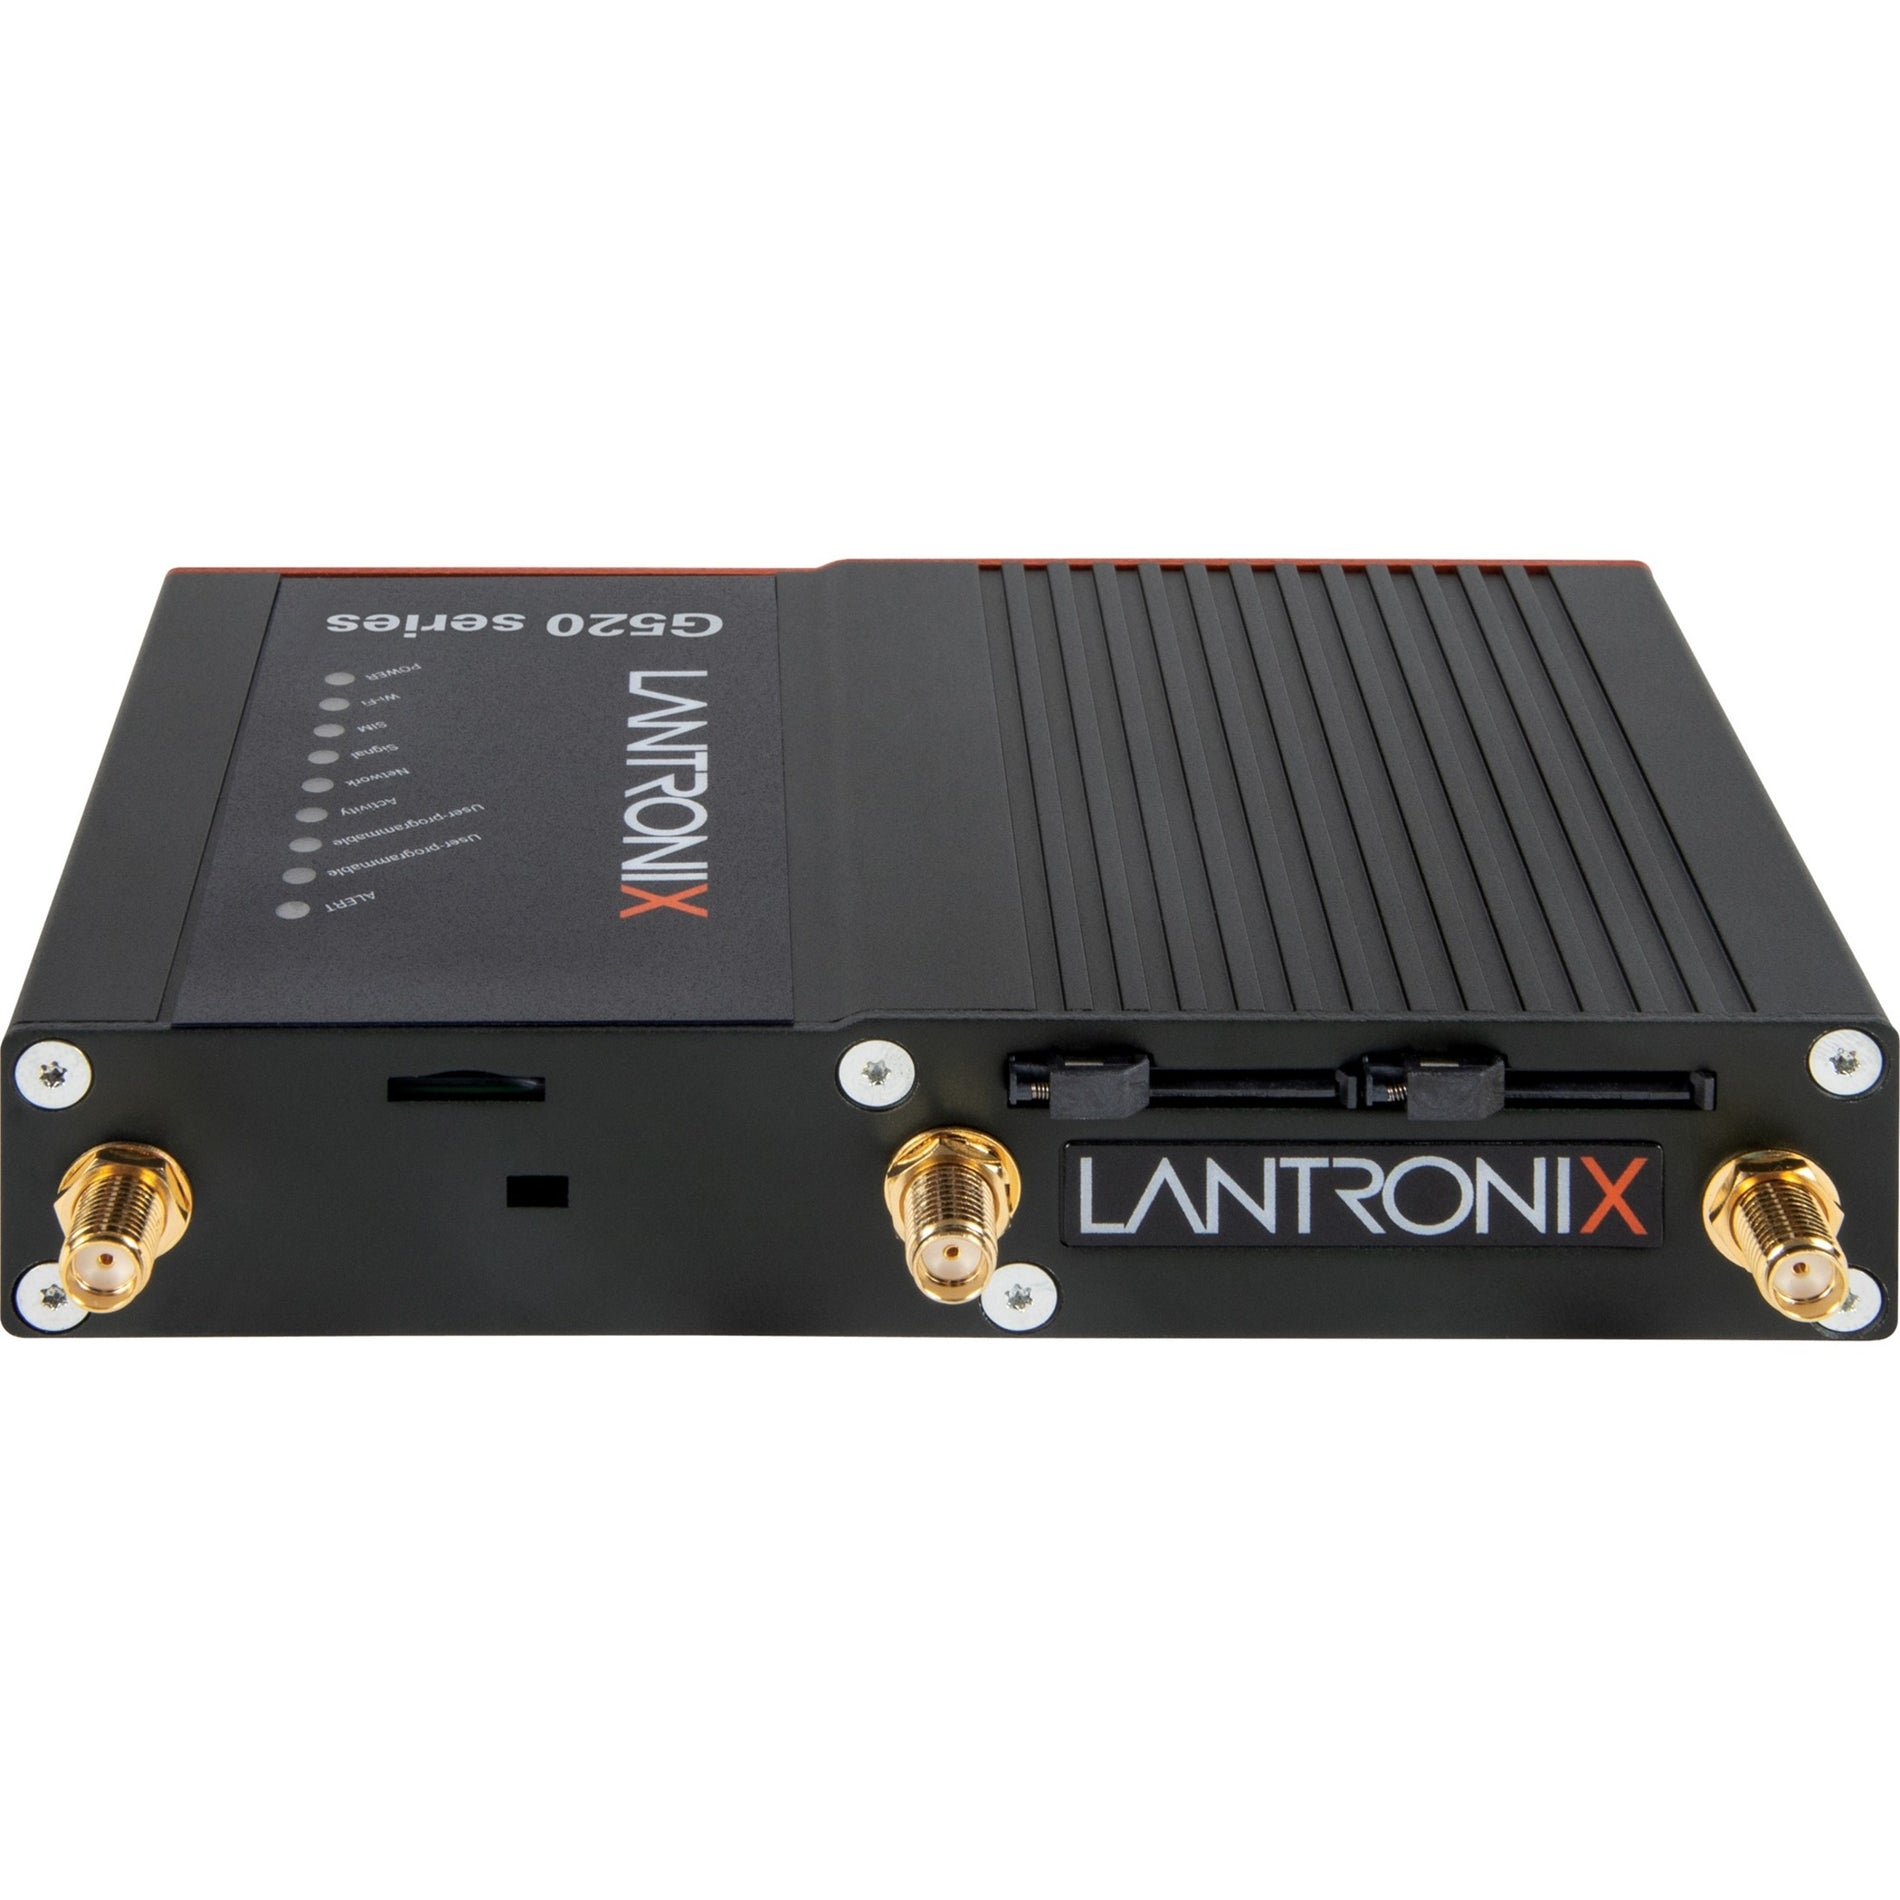 Lantronix G526GP1AS1B01 G520 Wireless Router LTE Cellular Fast Ethernet 2 Antennas